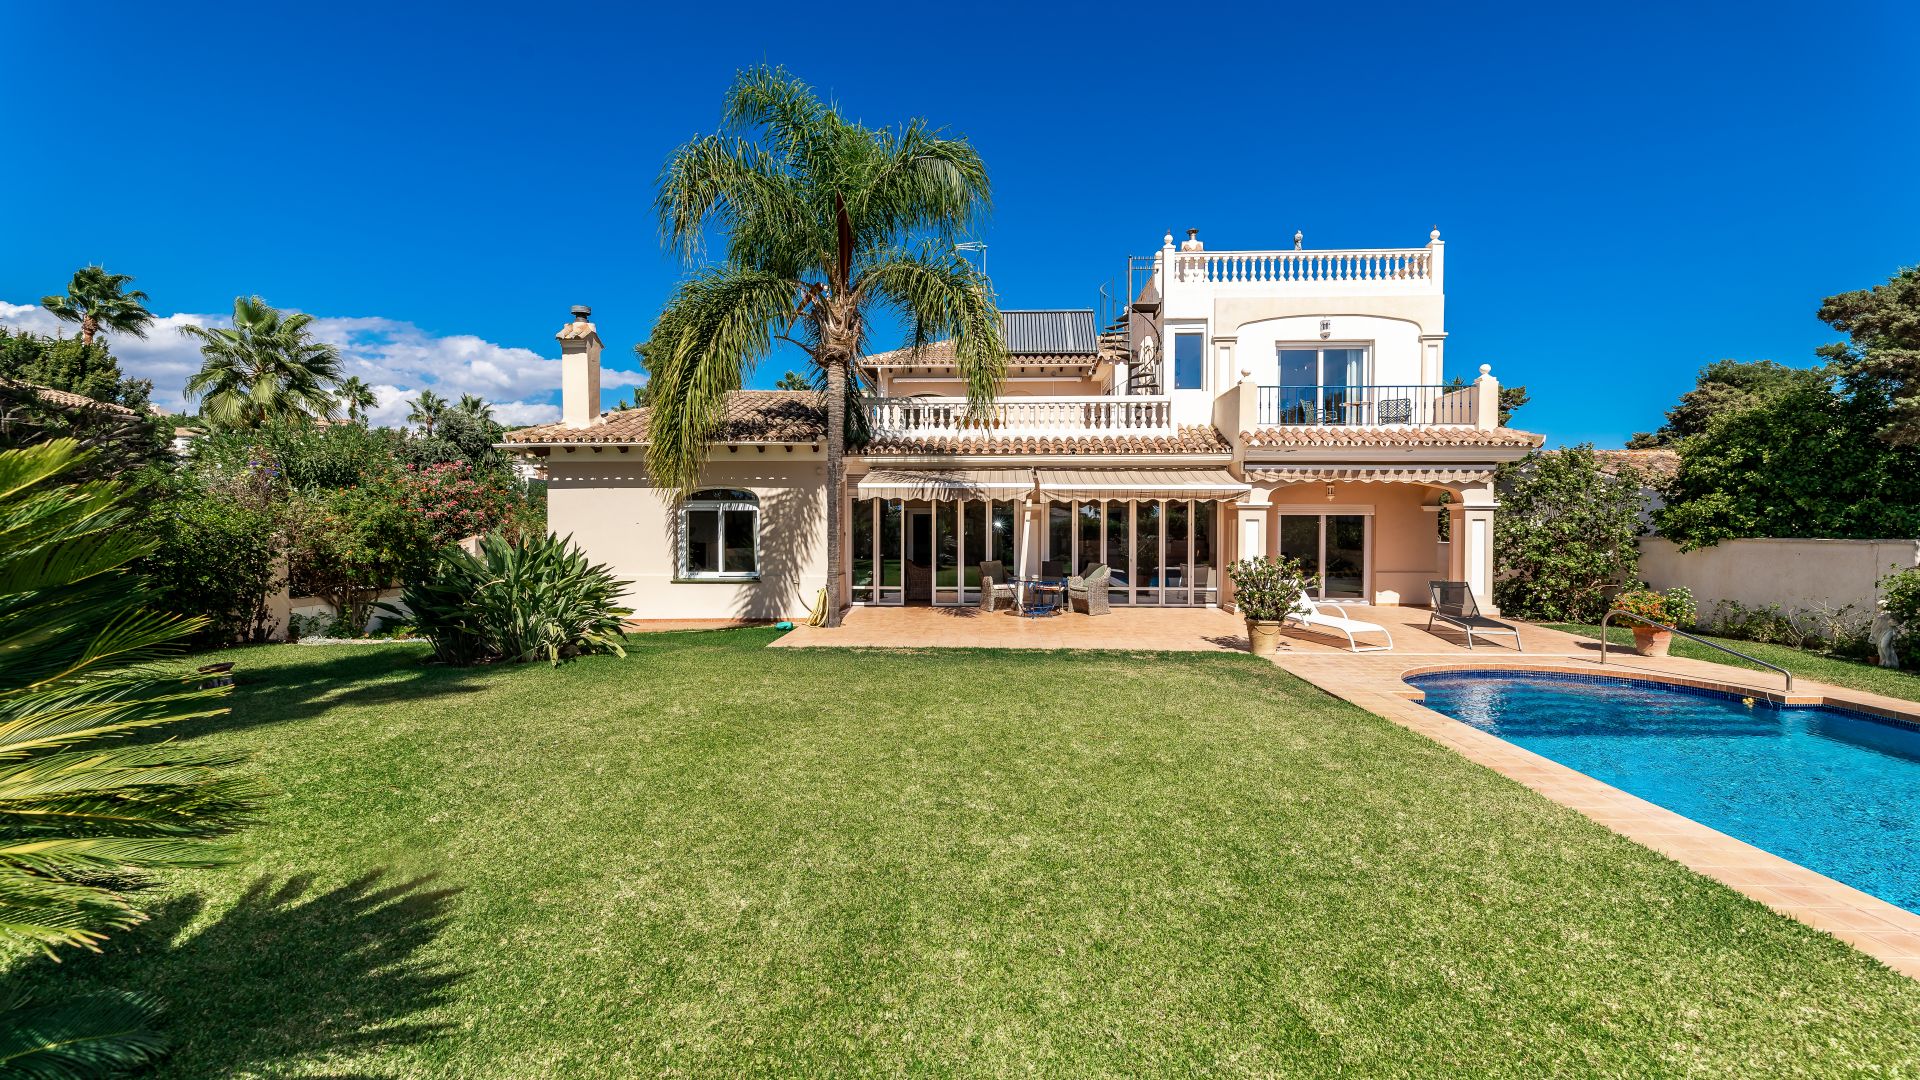 Villa within walking distance to the beach | Engel & Völkers Marbella